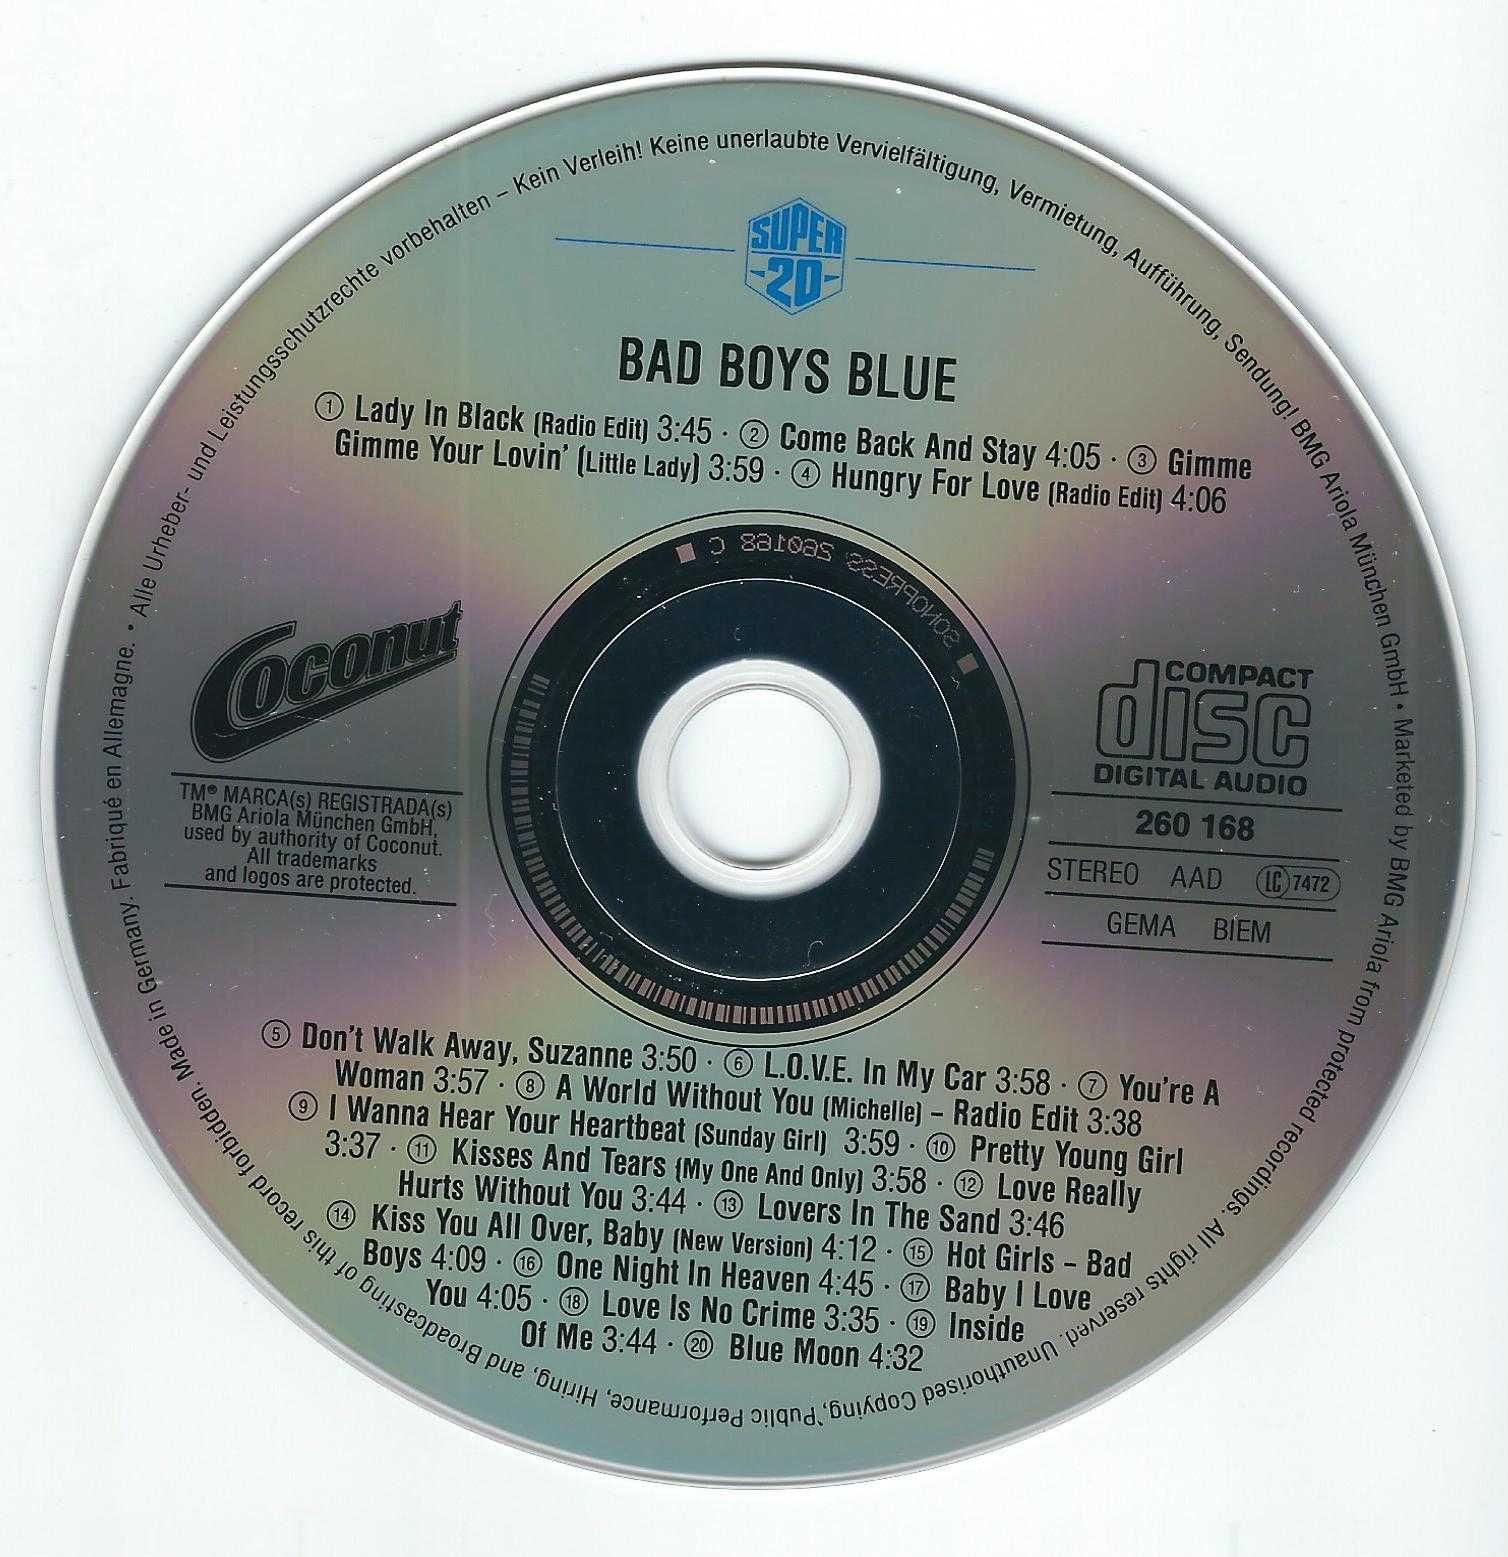 CD Bad Boys Blue - Super 20 (1989) (Coconut)